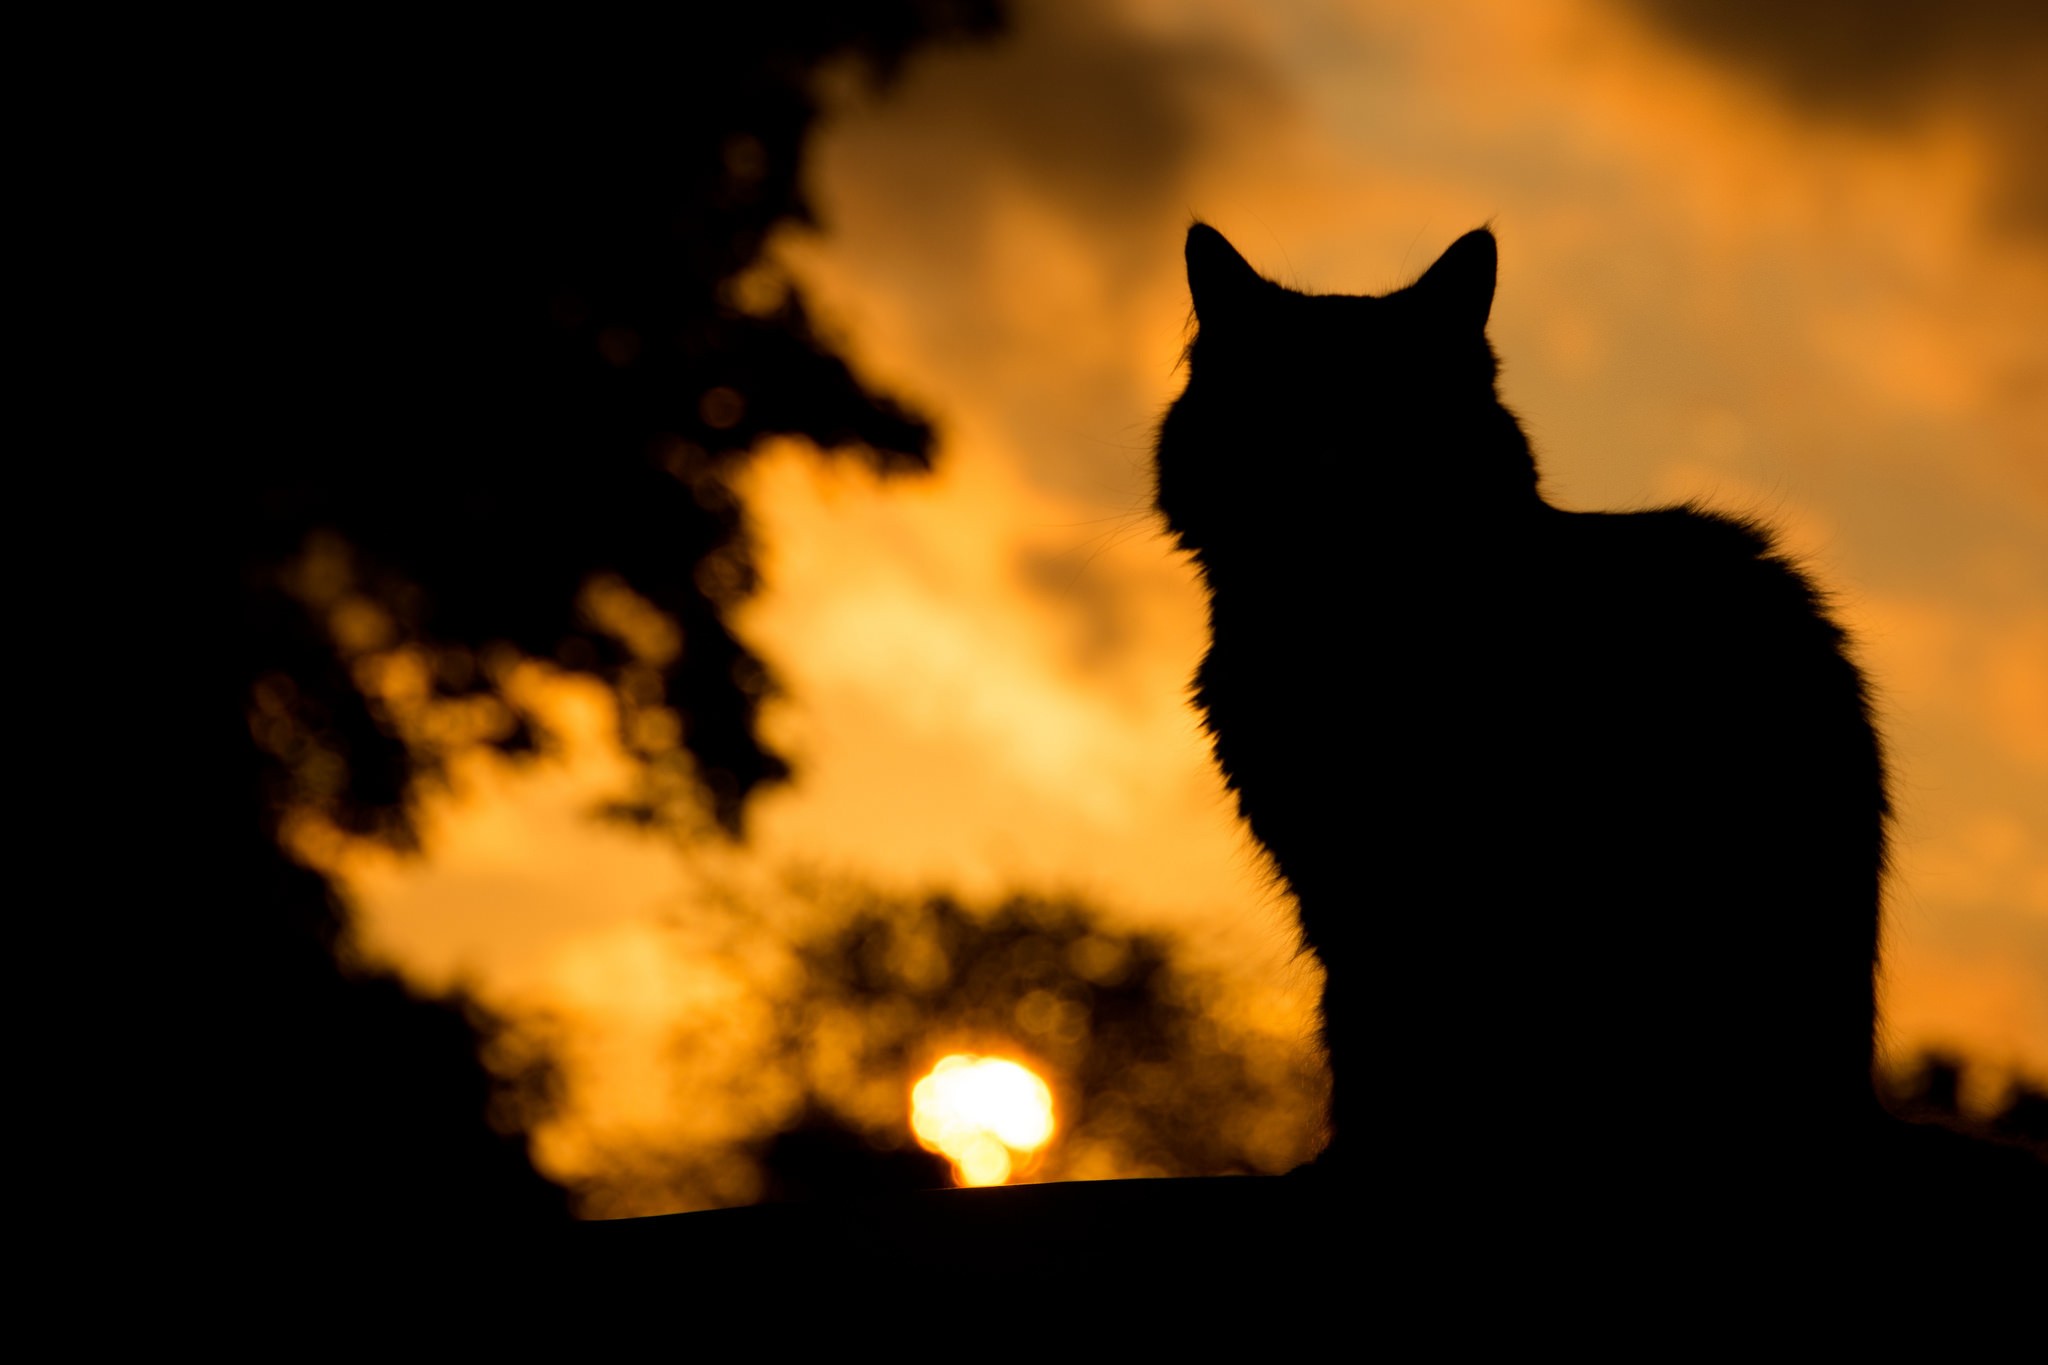 General 2048x1365 dark cats animals mammals silhouette sunset yellow outdoors sunlight feline